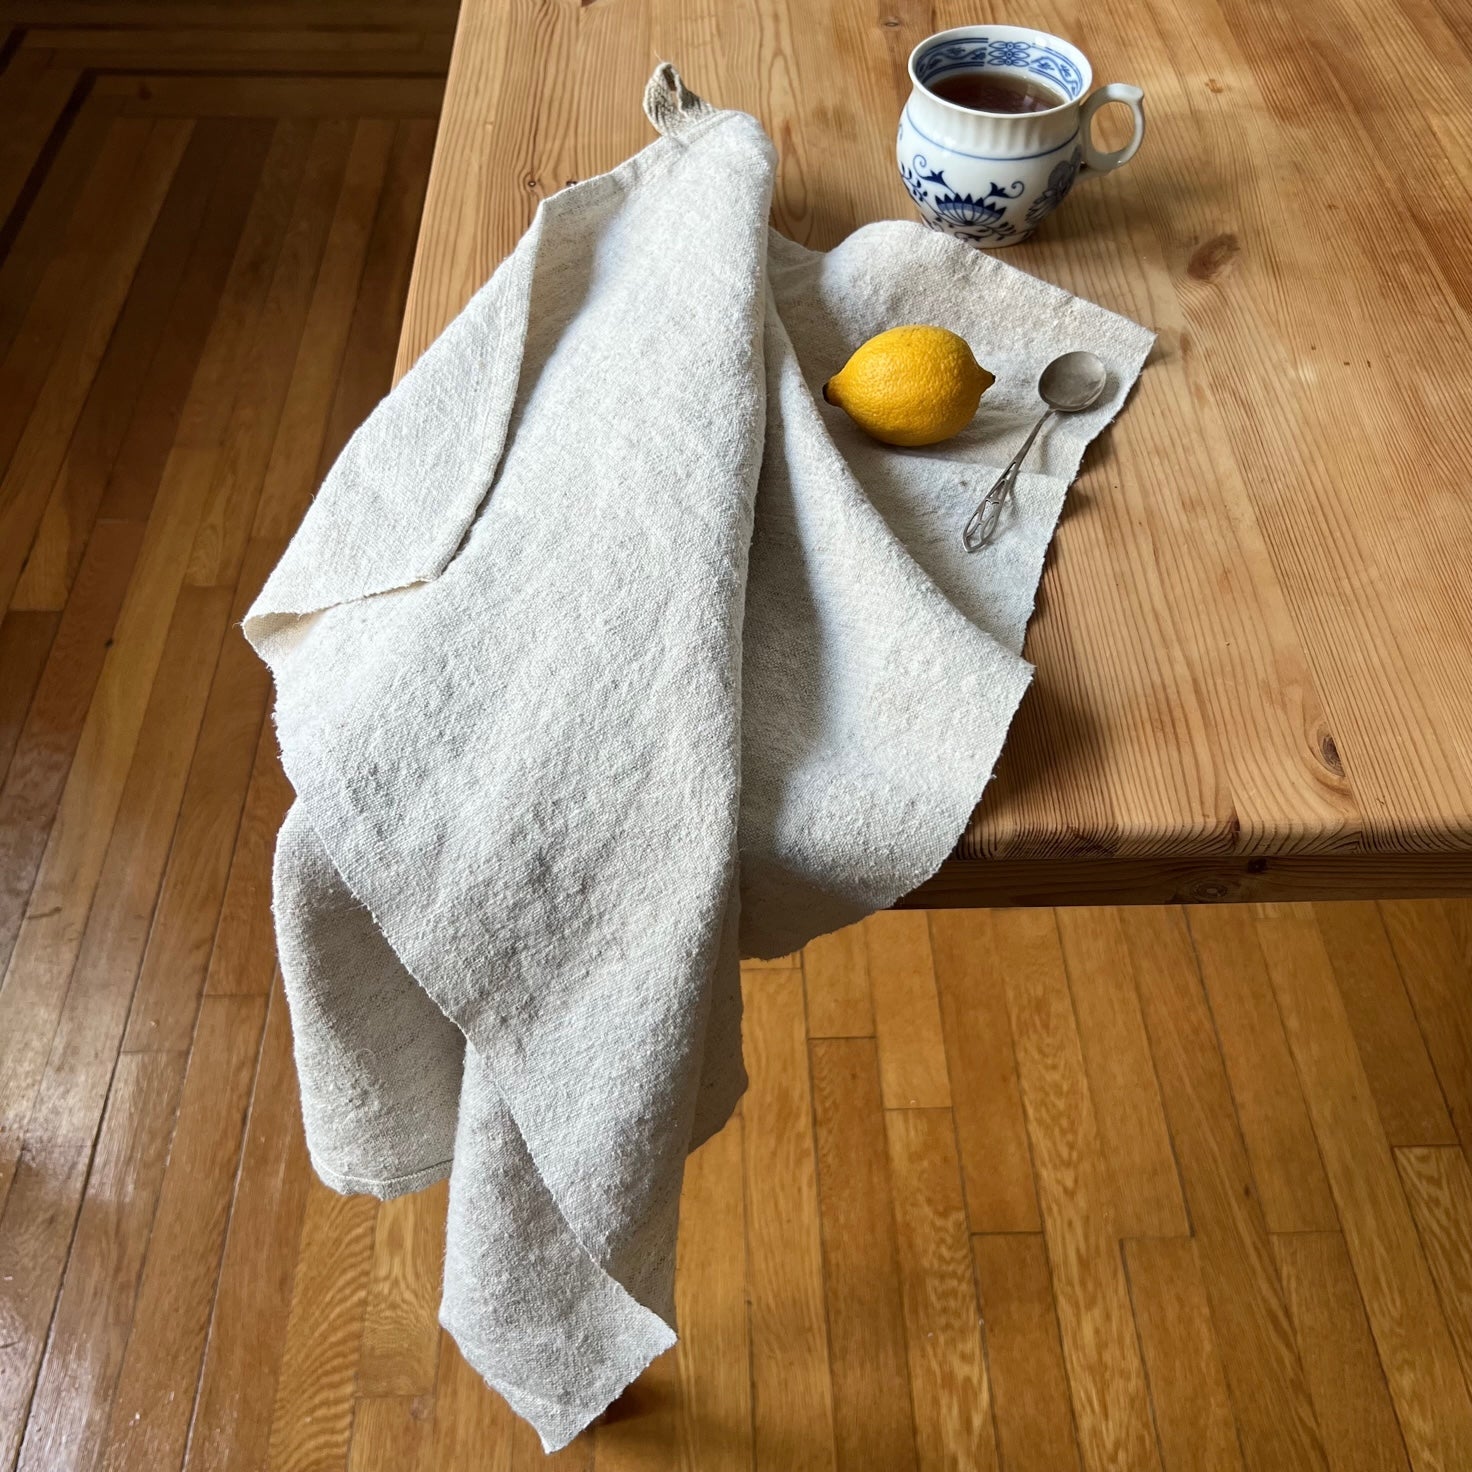 Wacaco | Barista Towels Pack | Set of 2 Towels